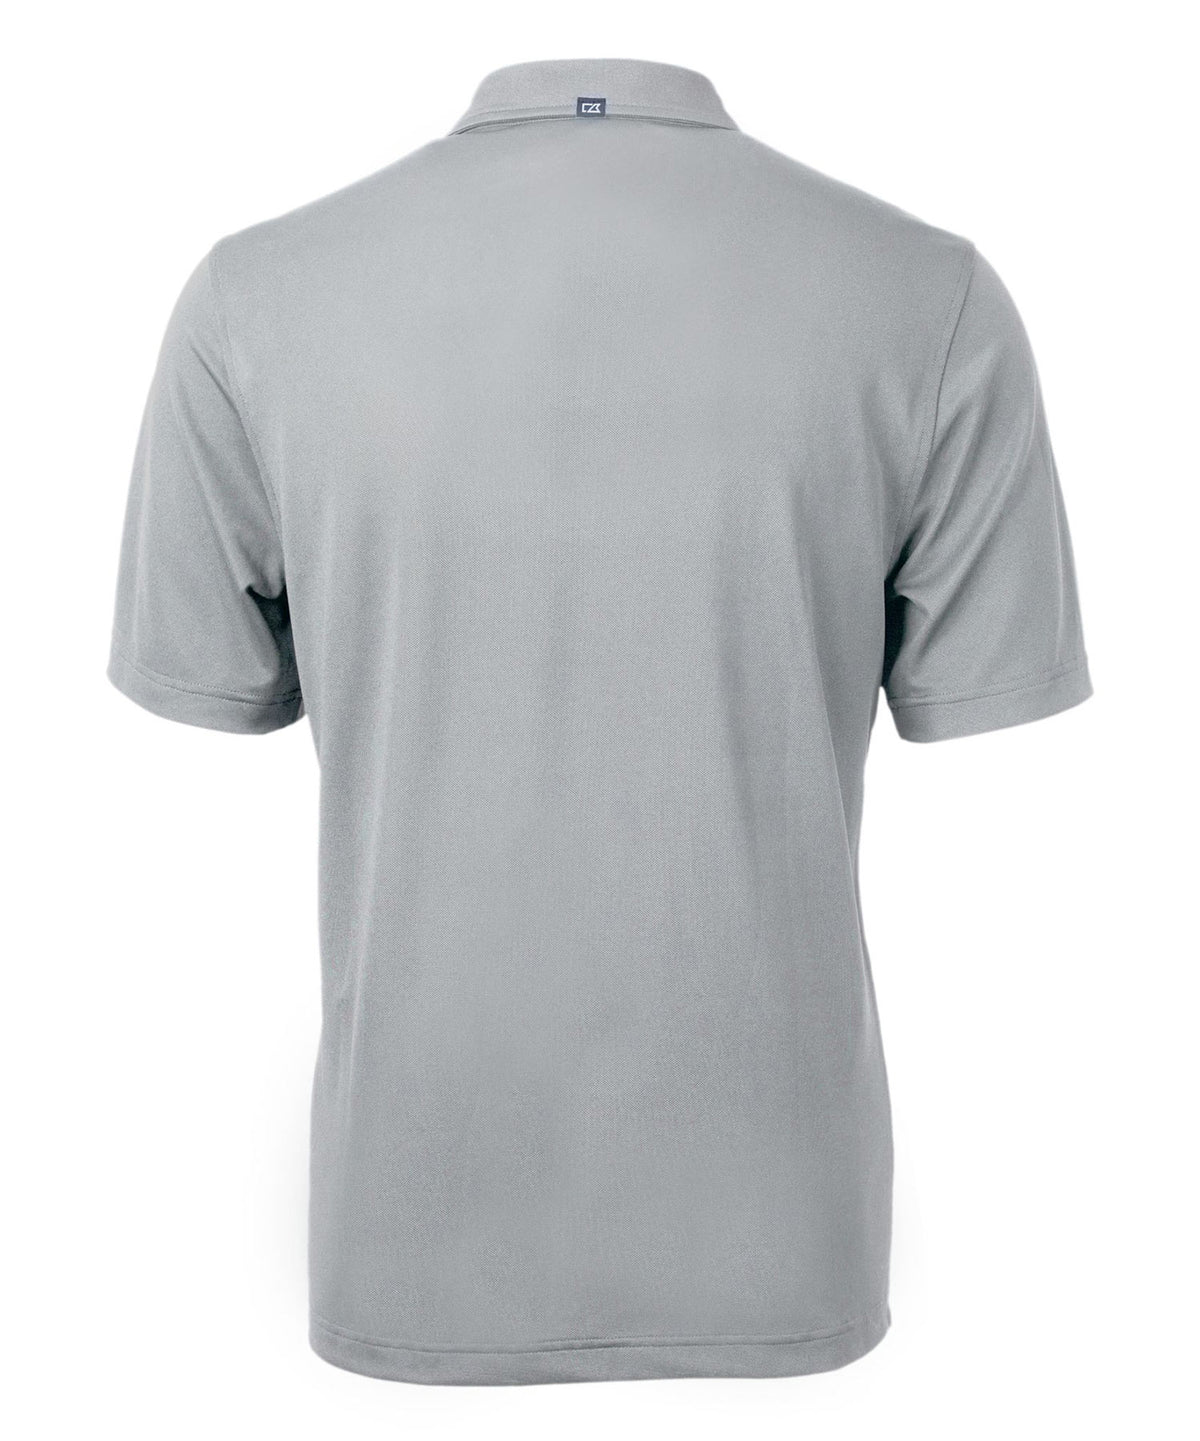 Cutter & Buck University of Miami Hurricanes Short Sleeve Polo Knit Shirt, Men's Big & Tall